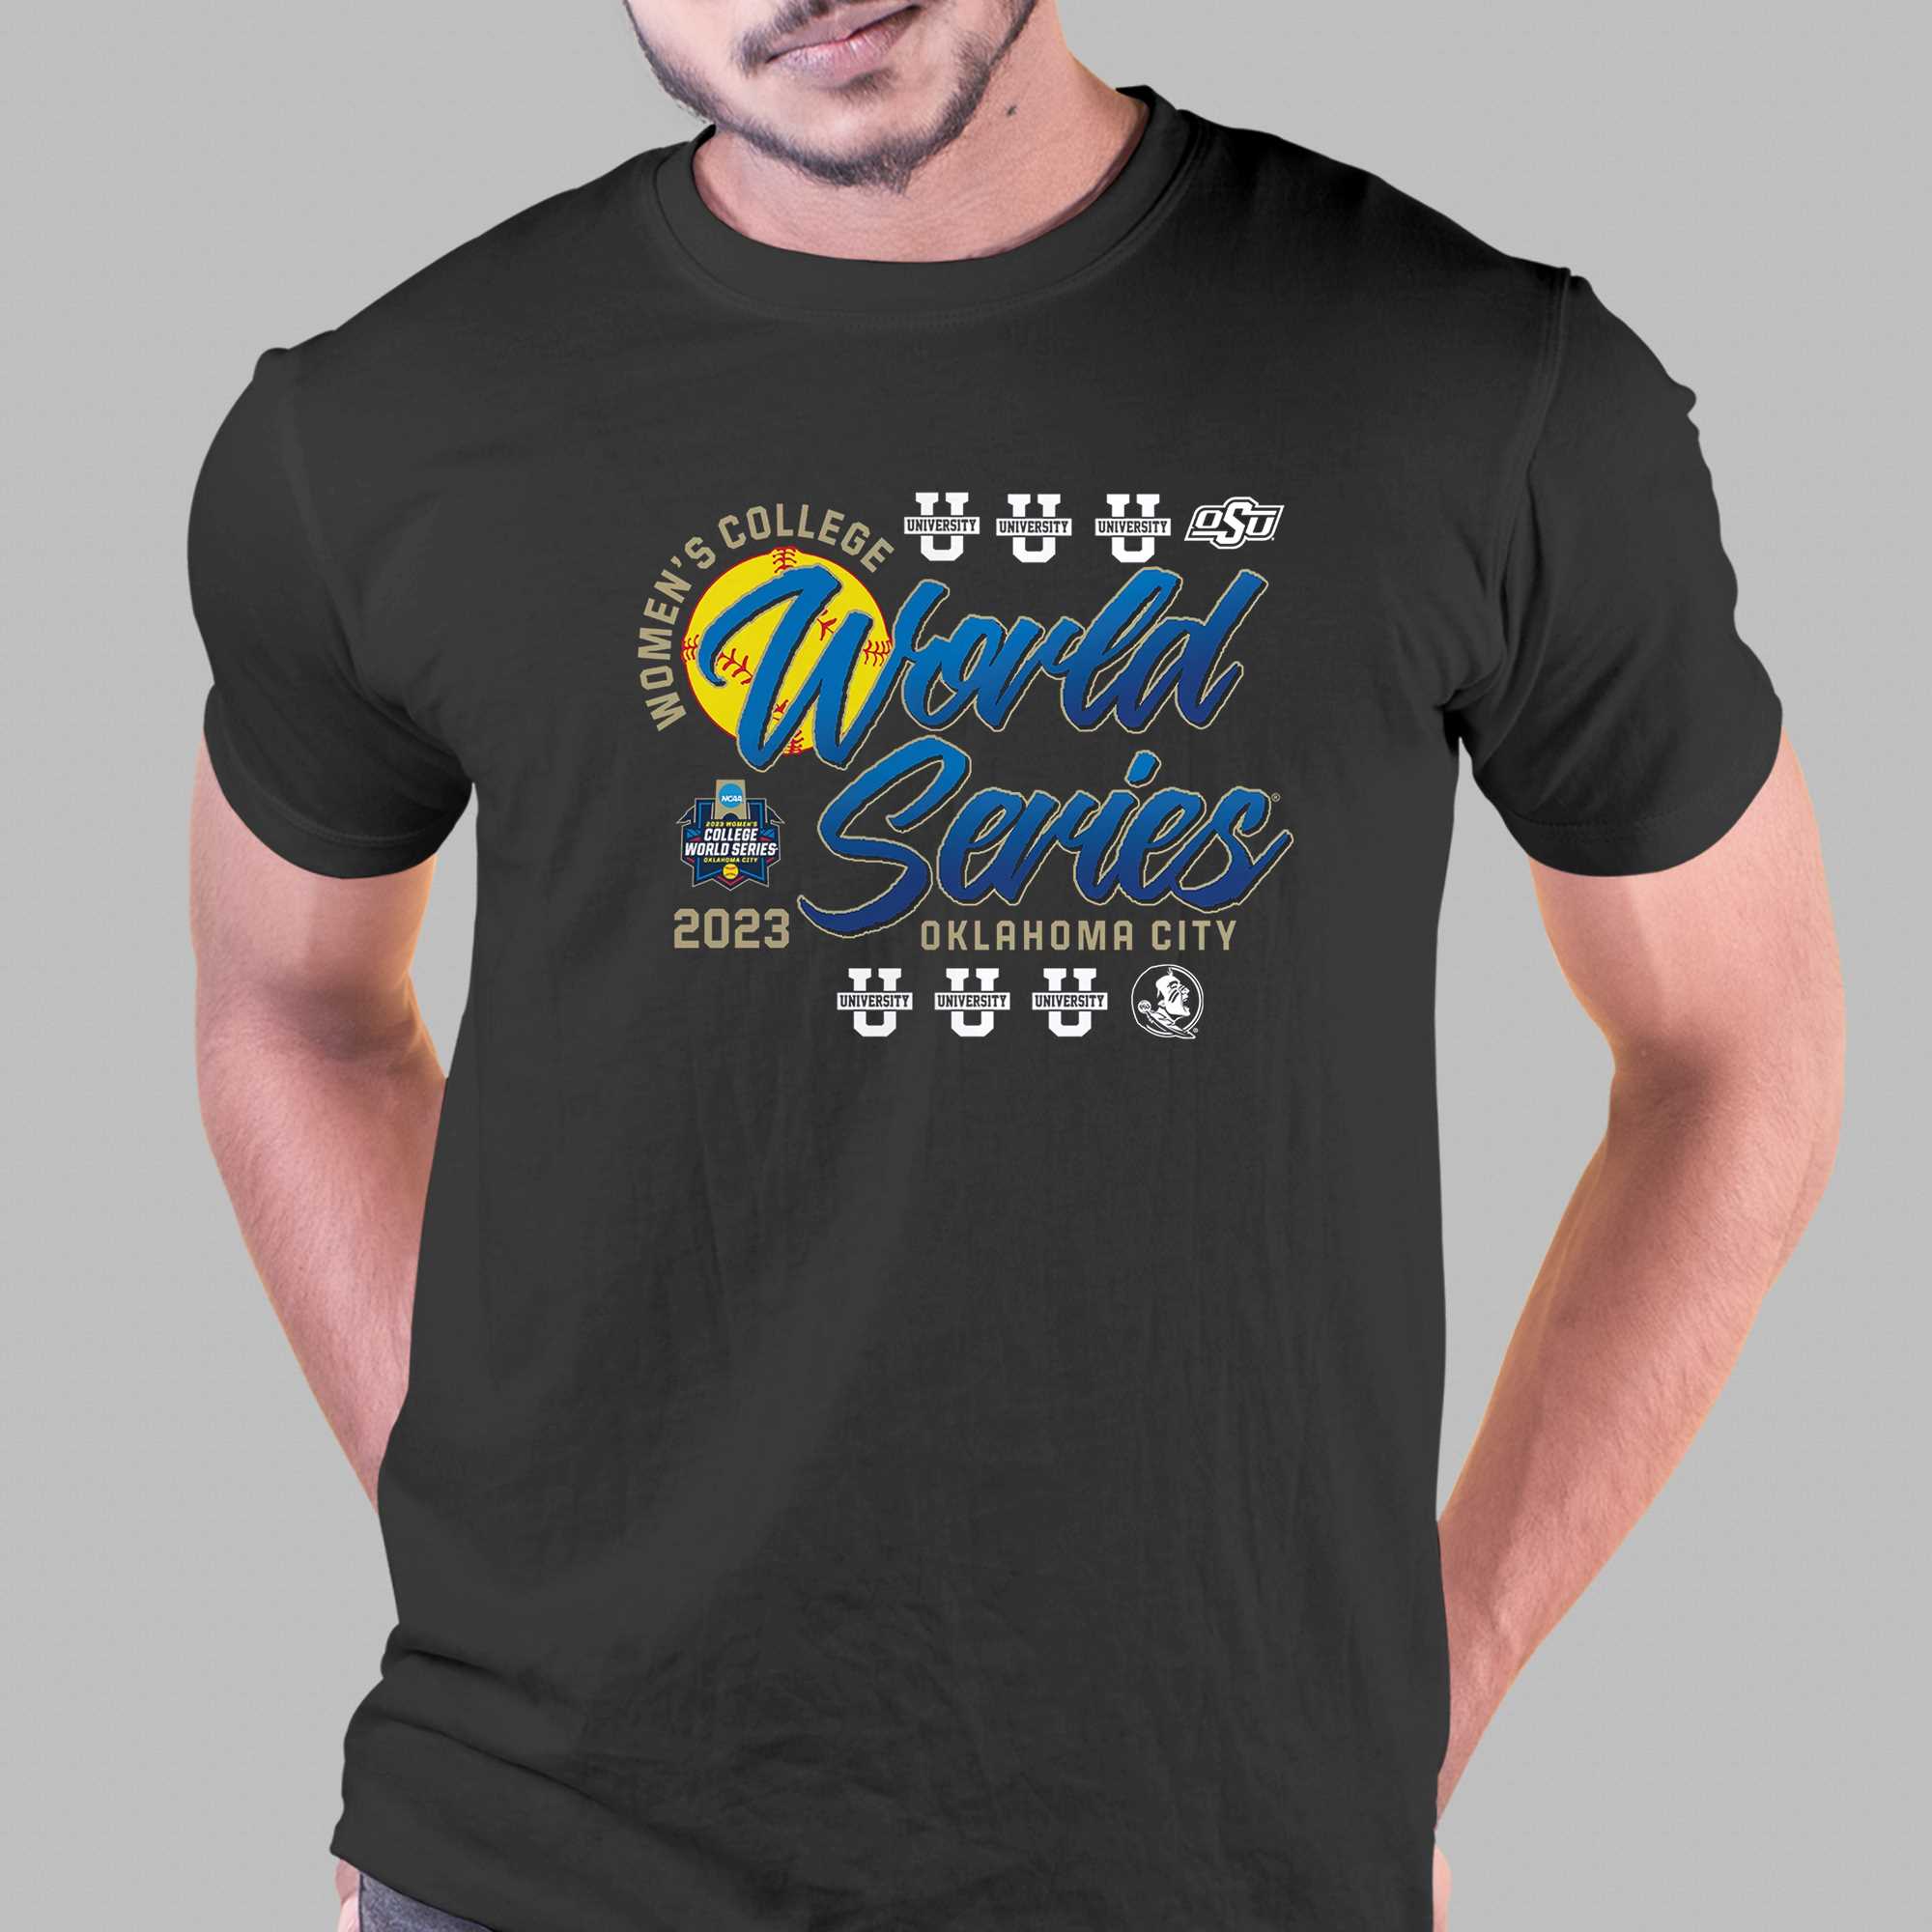 2021 Atlanta Braves World Series Shirt Champions 2021 Champions Shirt Navy  S-6XL